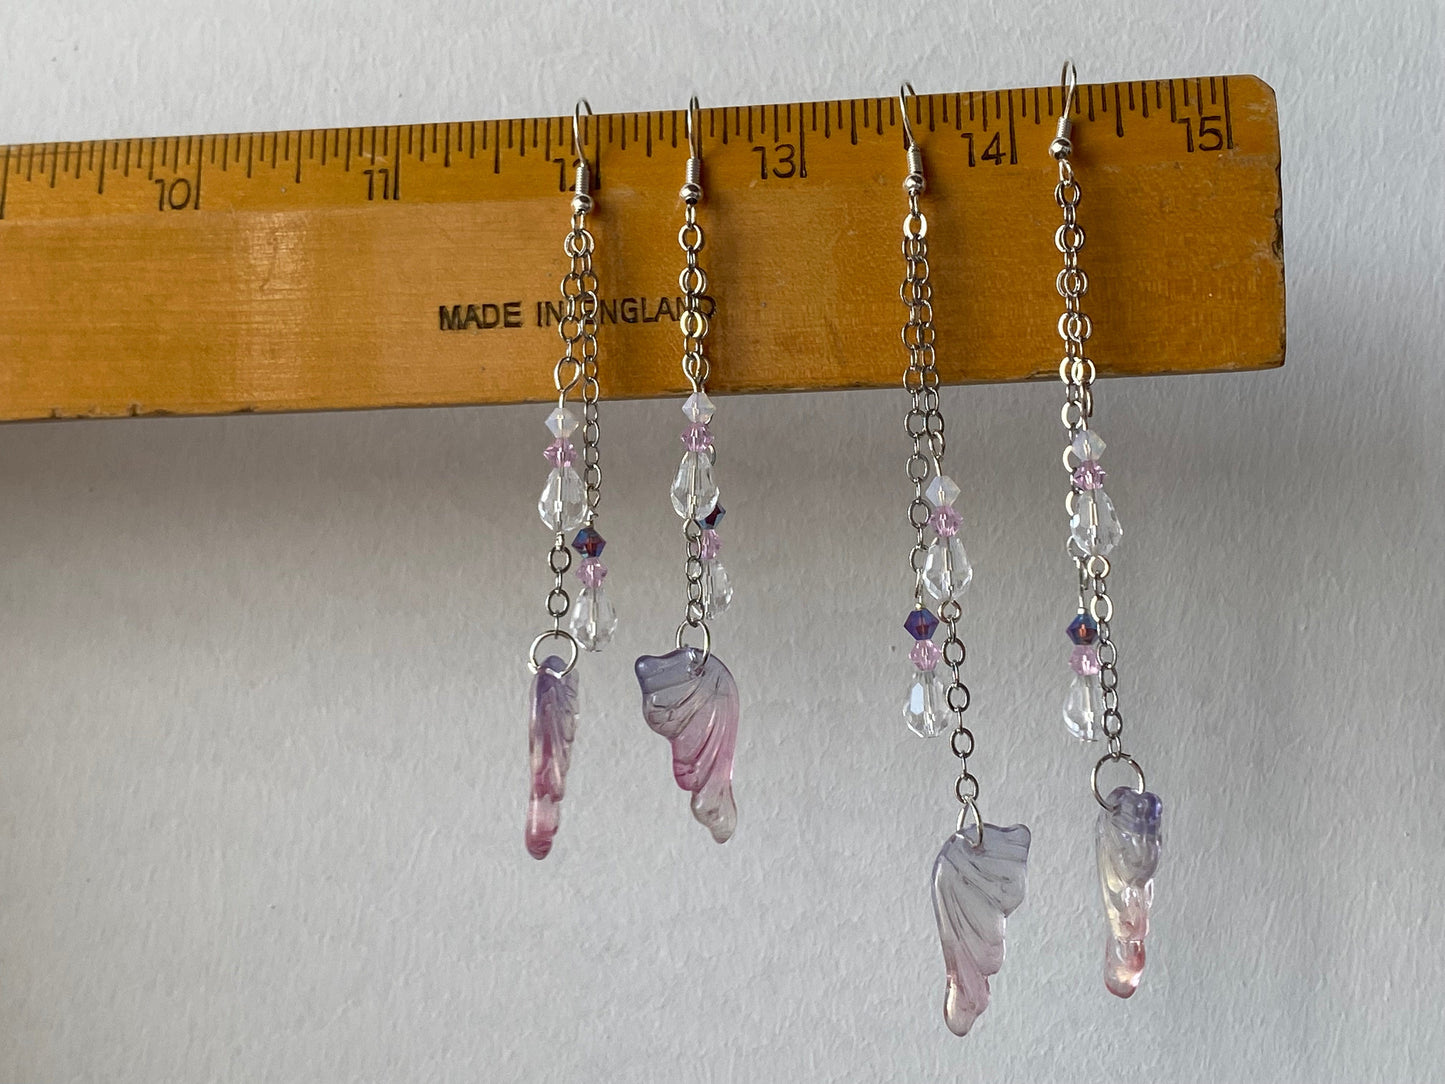 Ted & Bubs Earrings Fairy Wing Earrings - Ethereal Silver